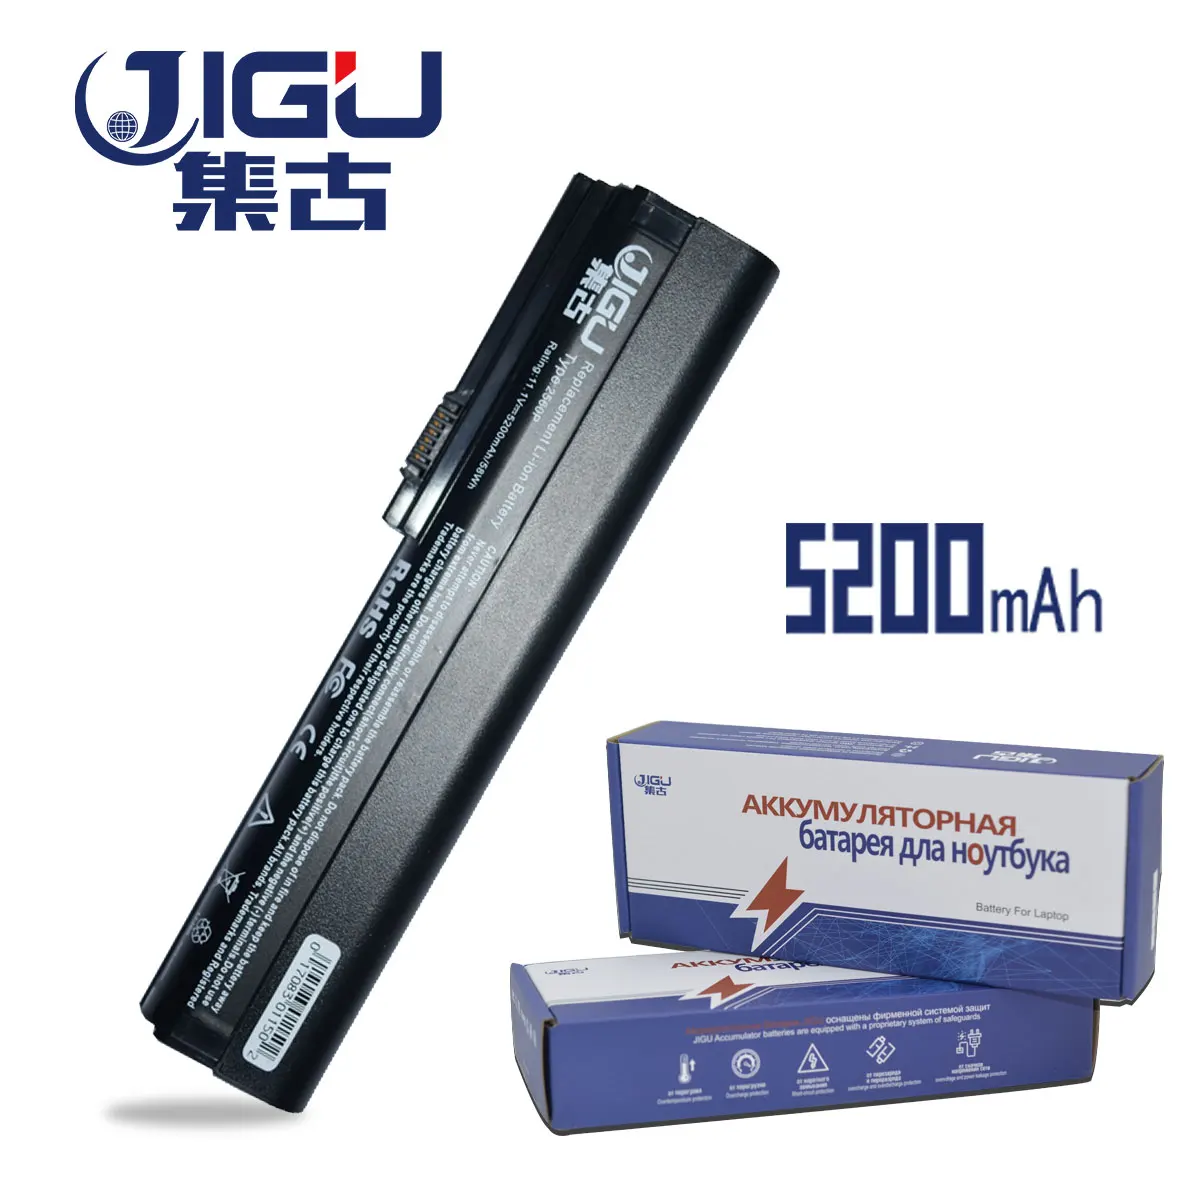 Аккумулятор JIGU для ноутбука Hp EliteBook 2560p 2570P QK644AA QK645AA SX06 SX06XL SX09 HSTNN DB2M|battery for hp|laptop - Фото №1